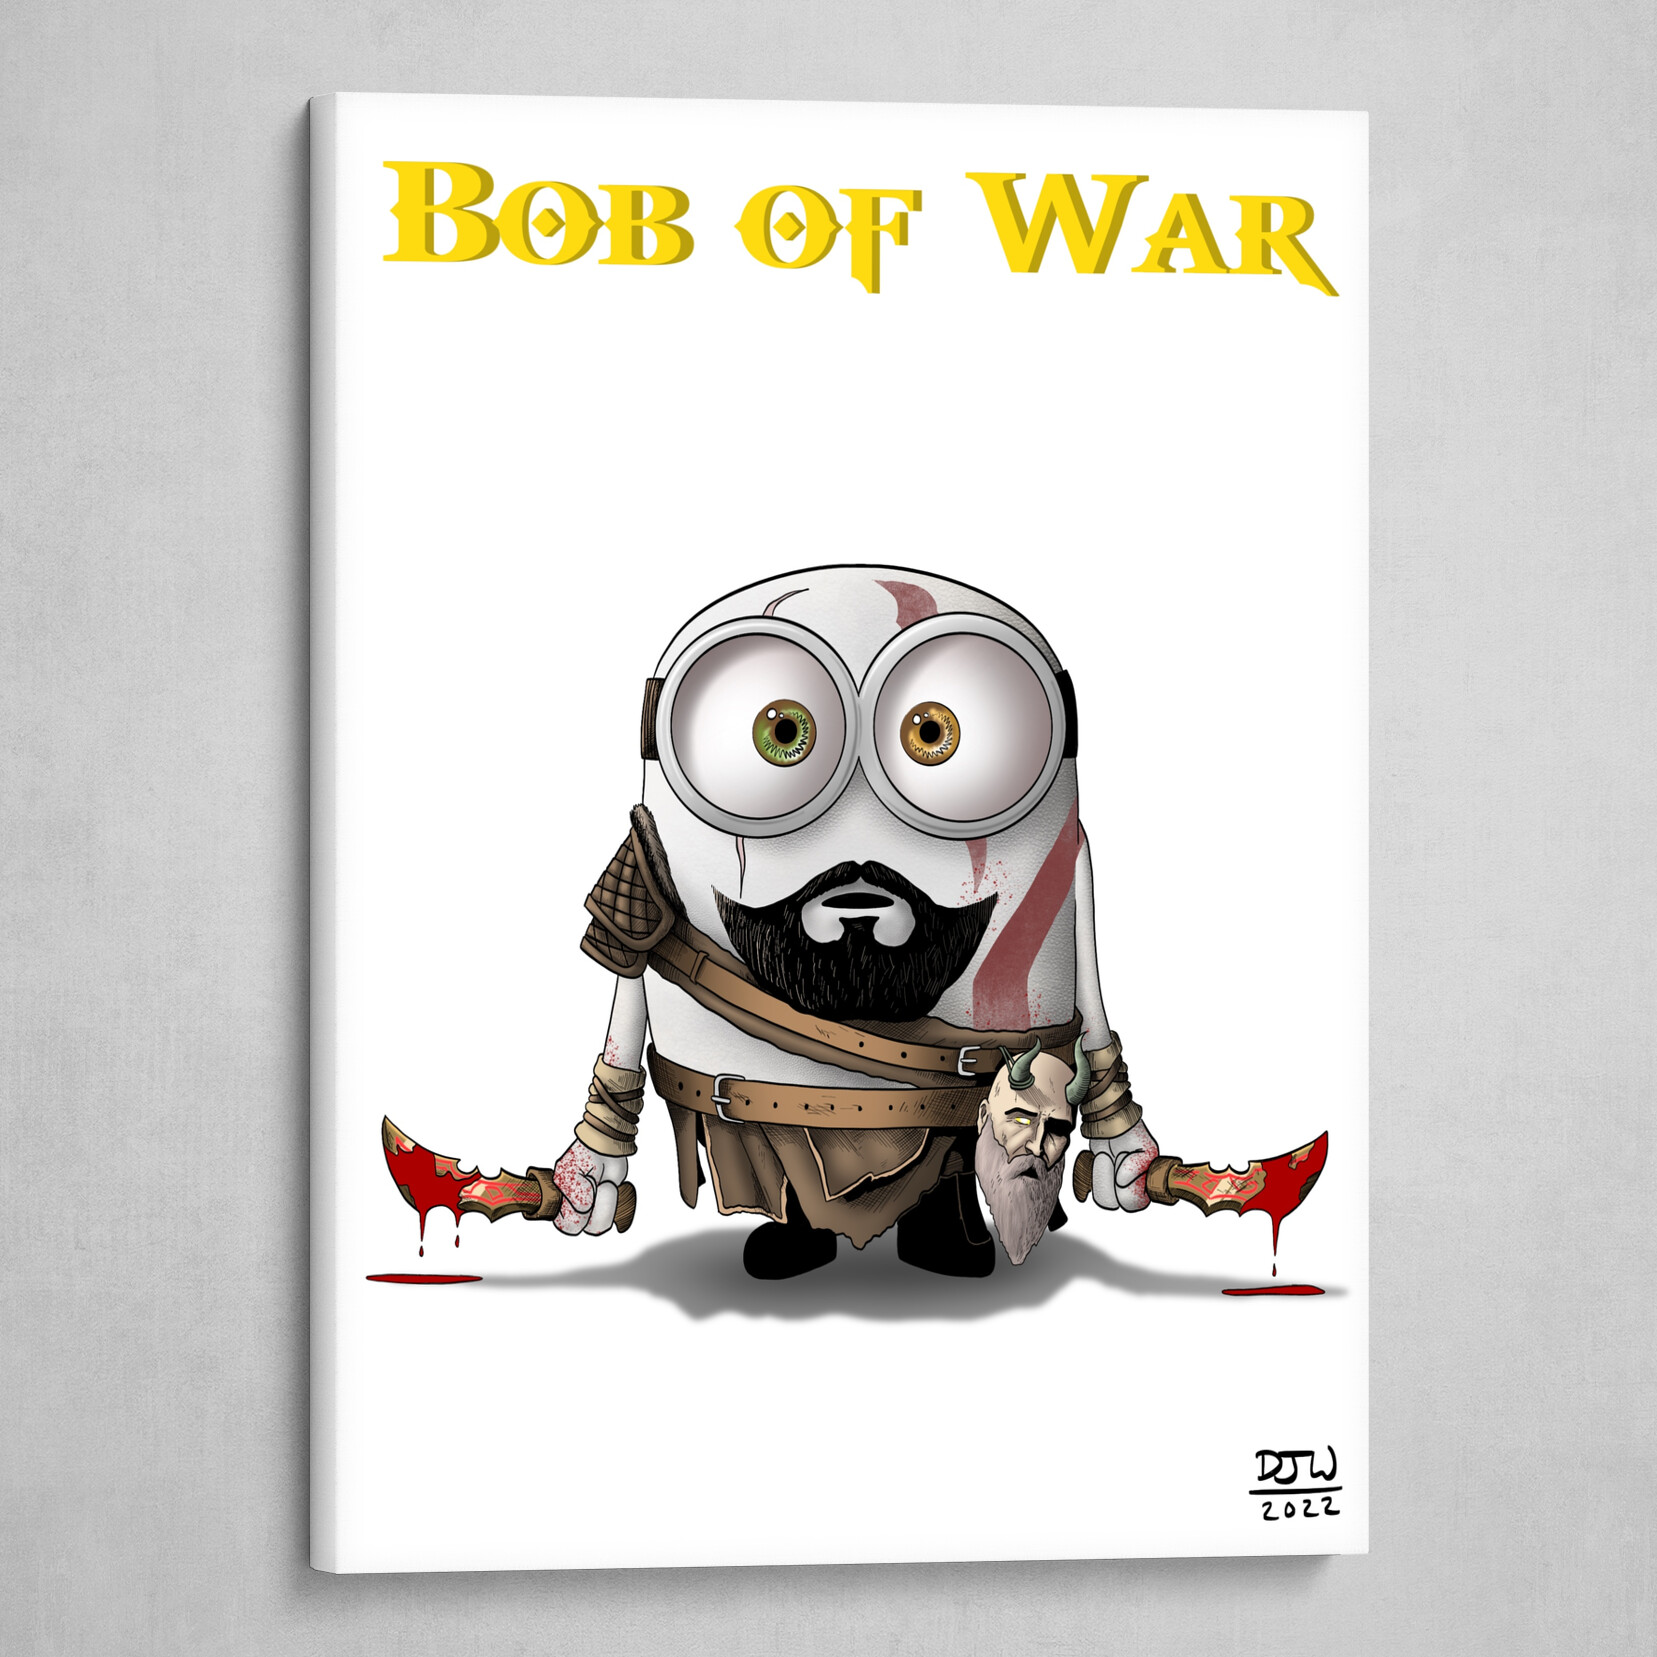 Bob of War